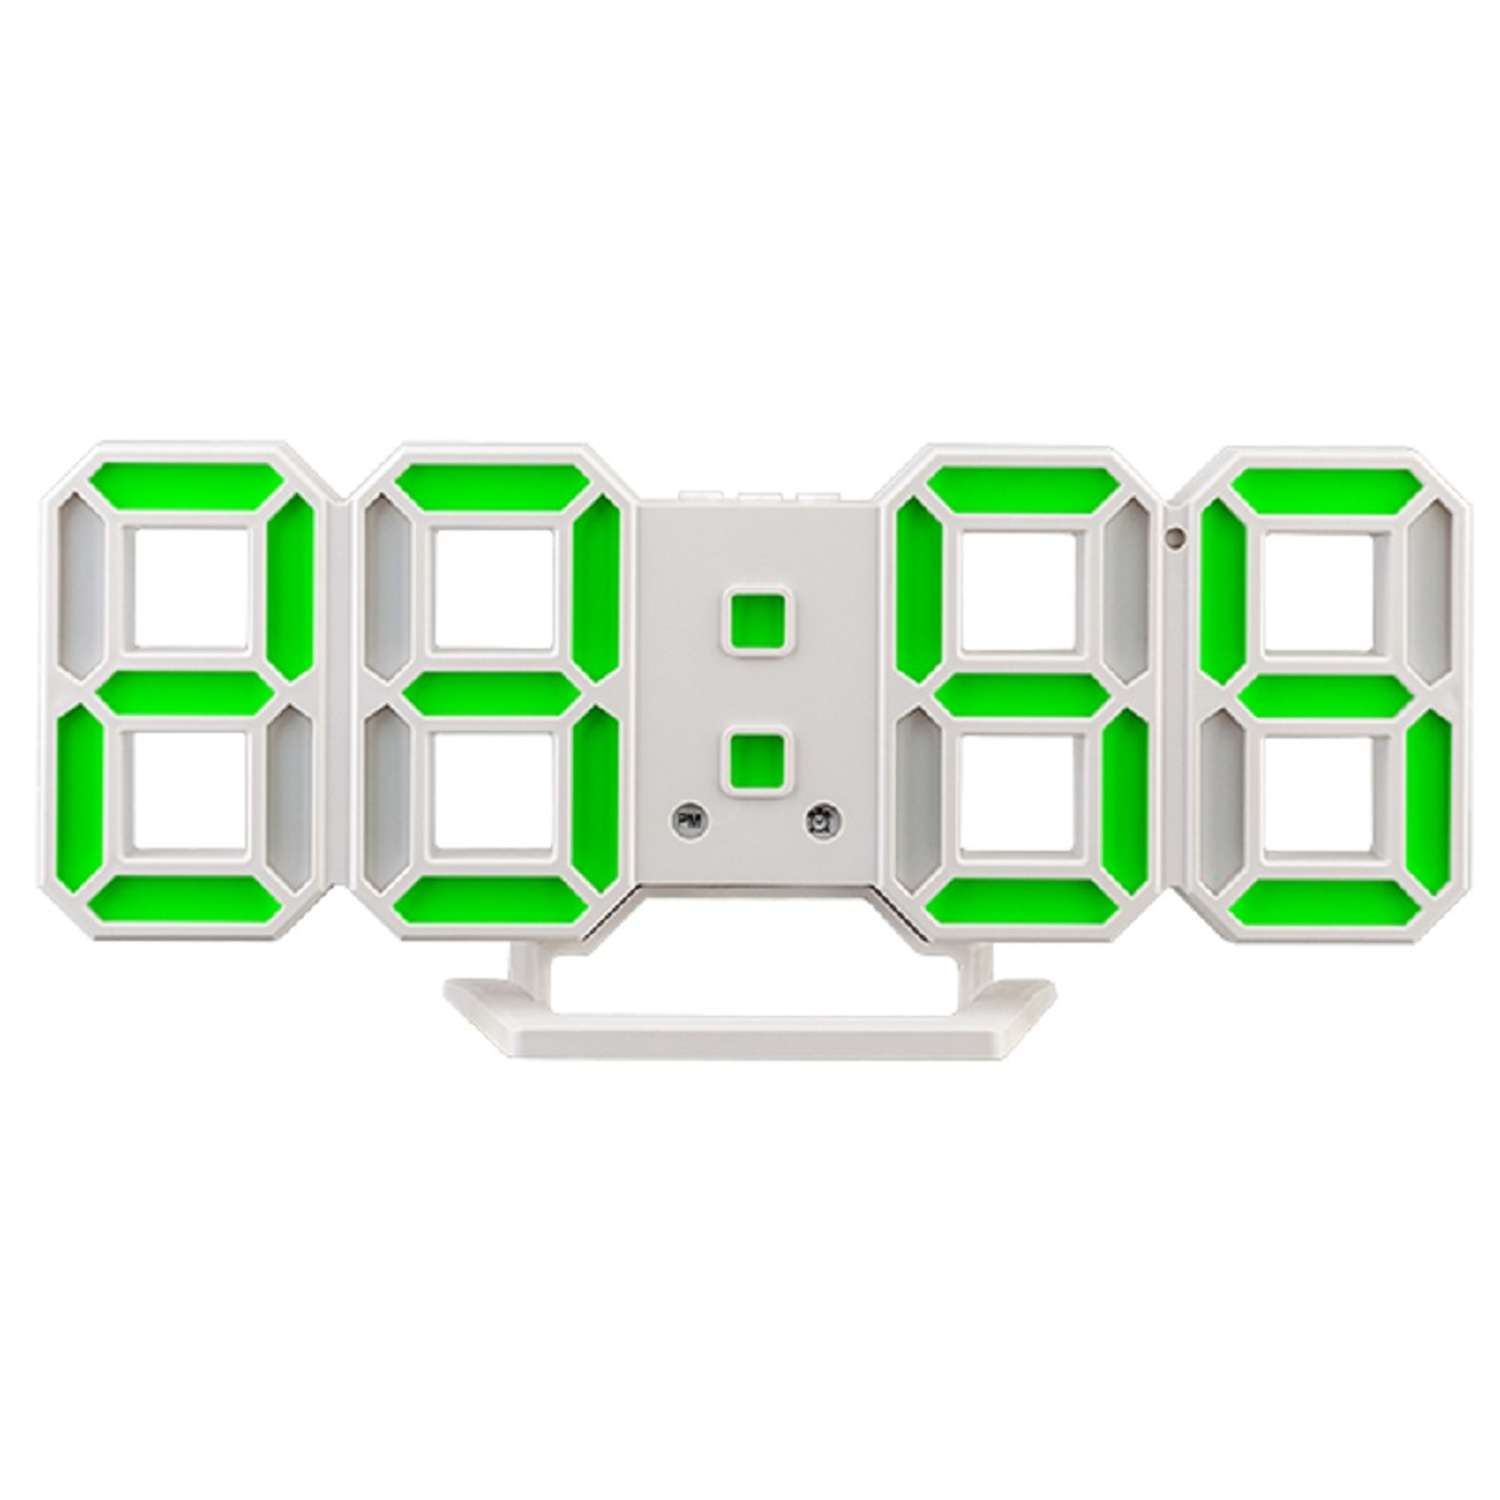 LED часы-будильник Perfeo LUMINOUS 2 белый корпус зелёная подсветка PF-6111 - фото 2